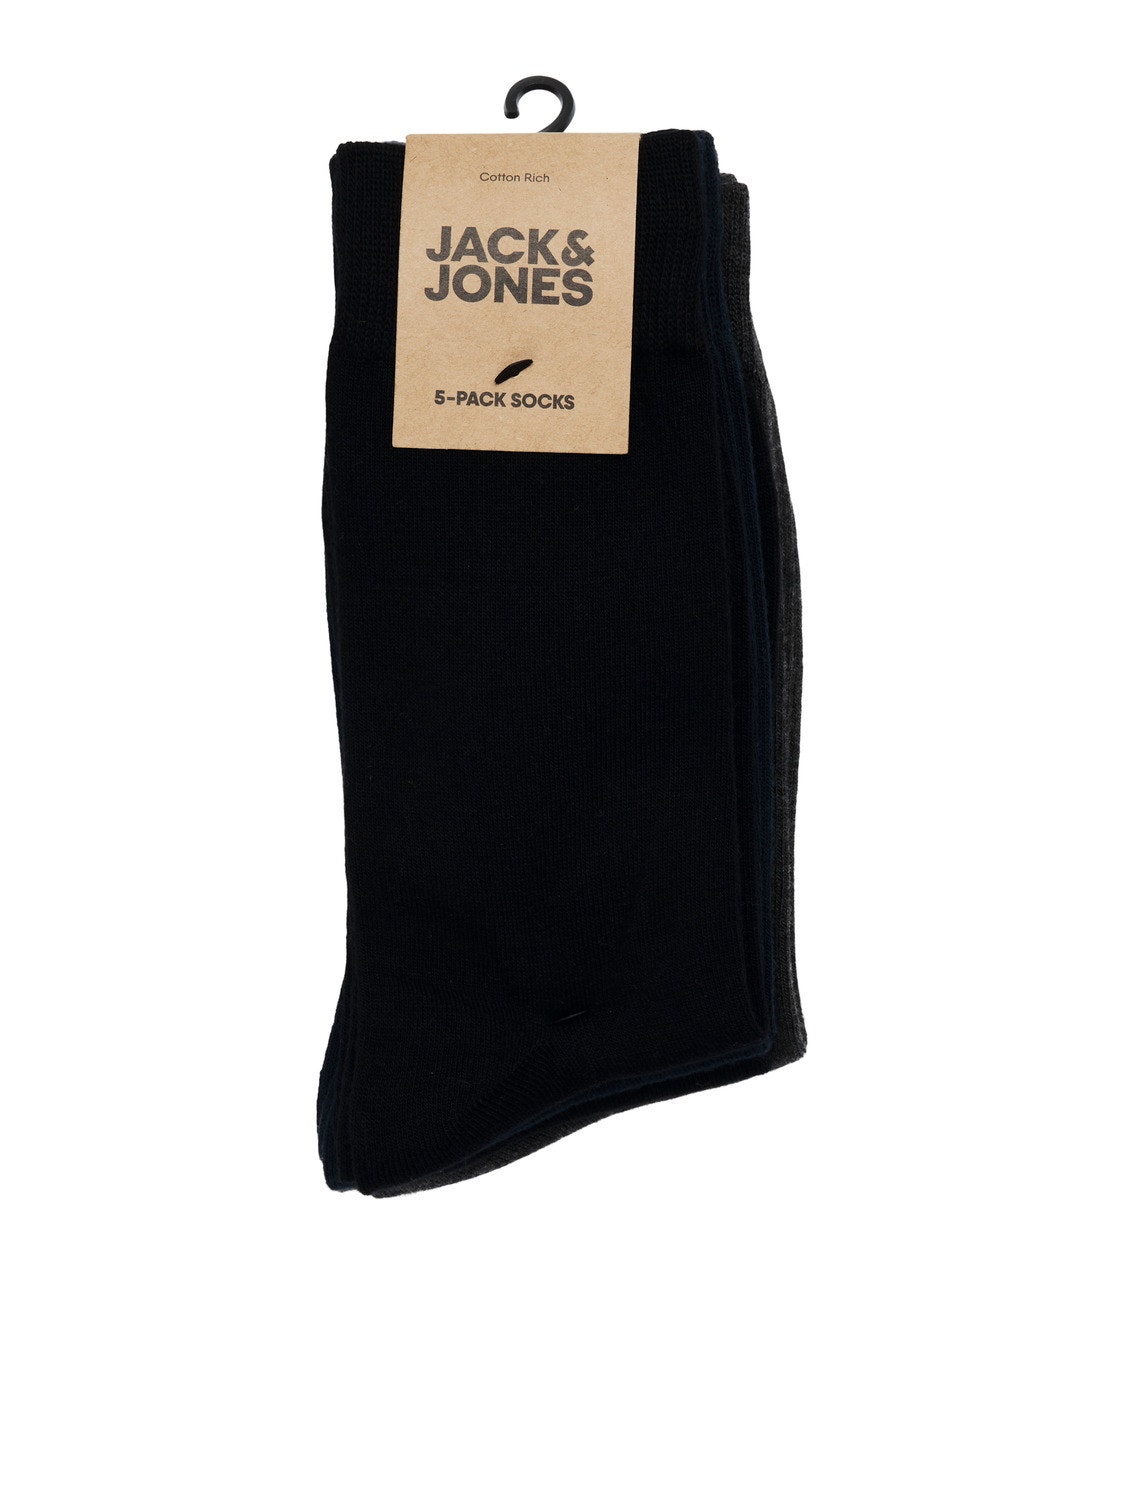 Jack & Jones 5 Socks -Black - 12198027